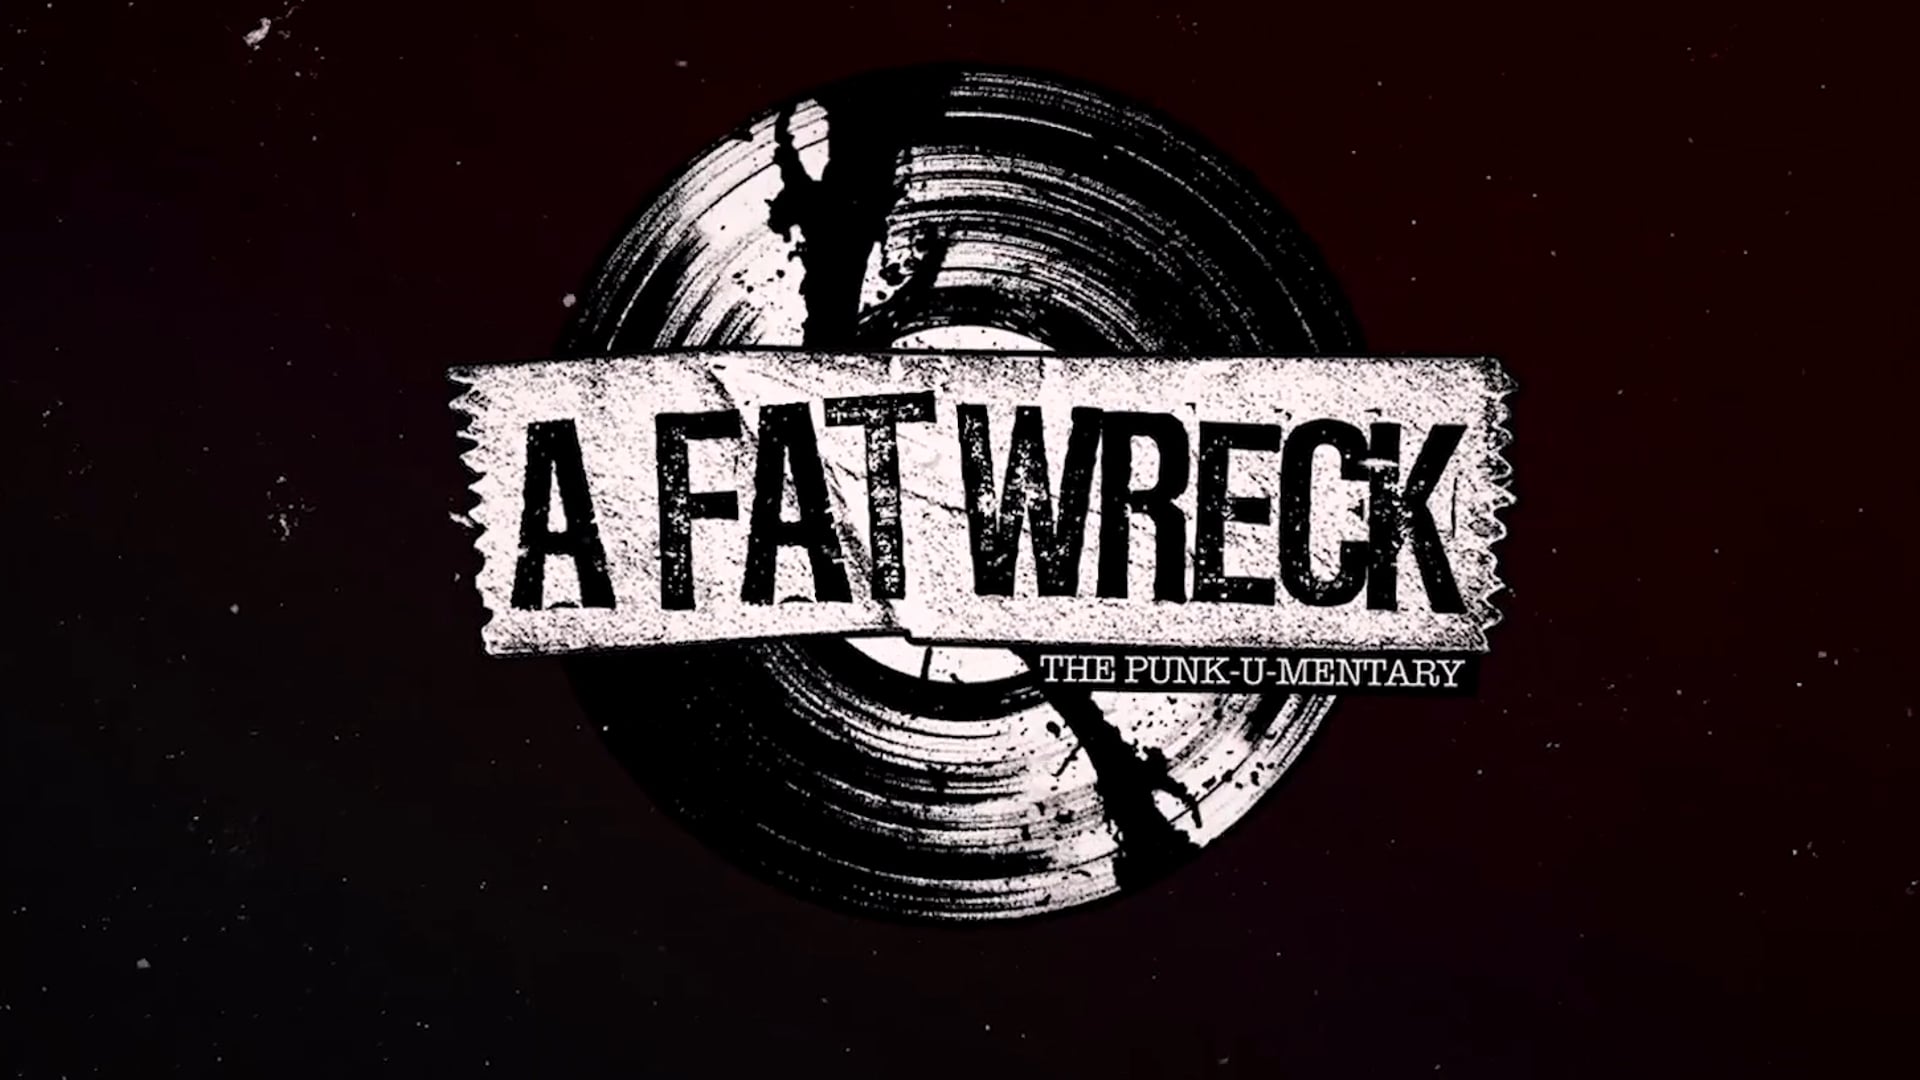 A FAT WRECK - Documentary | Trailer